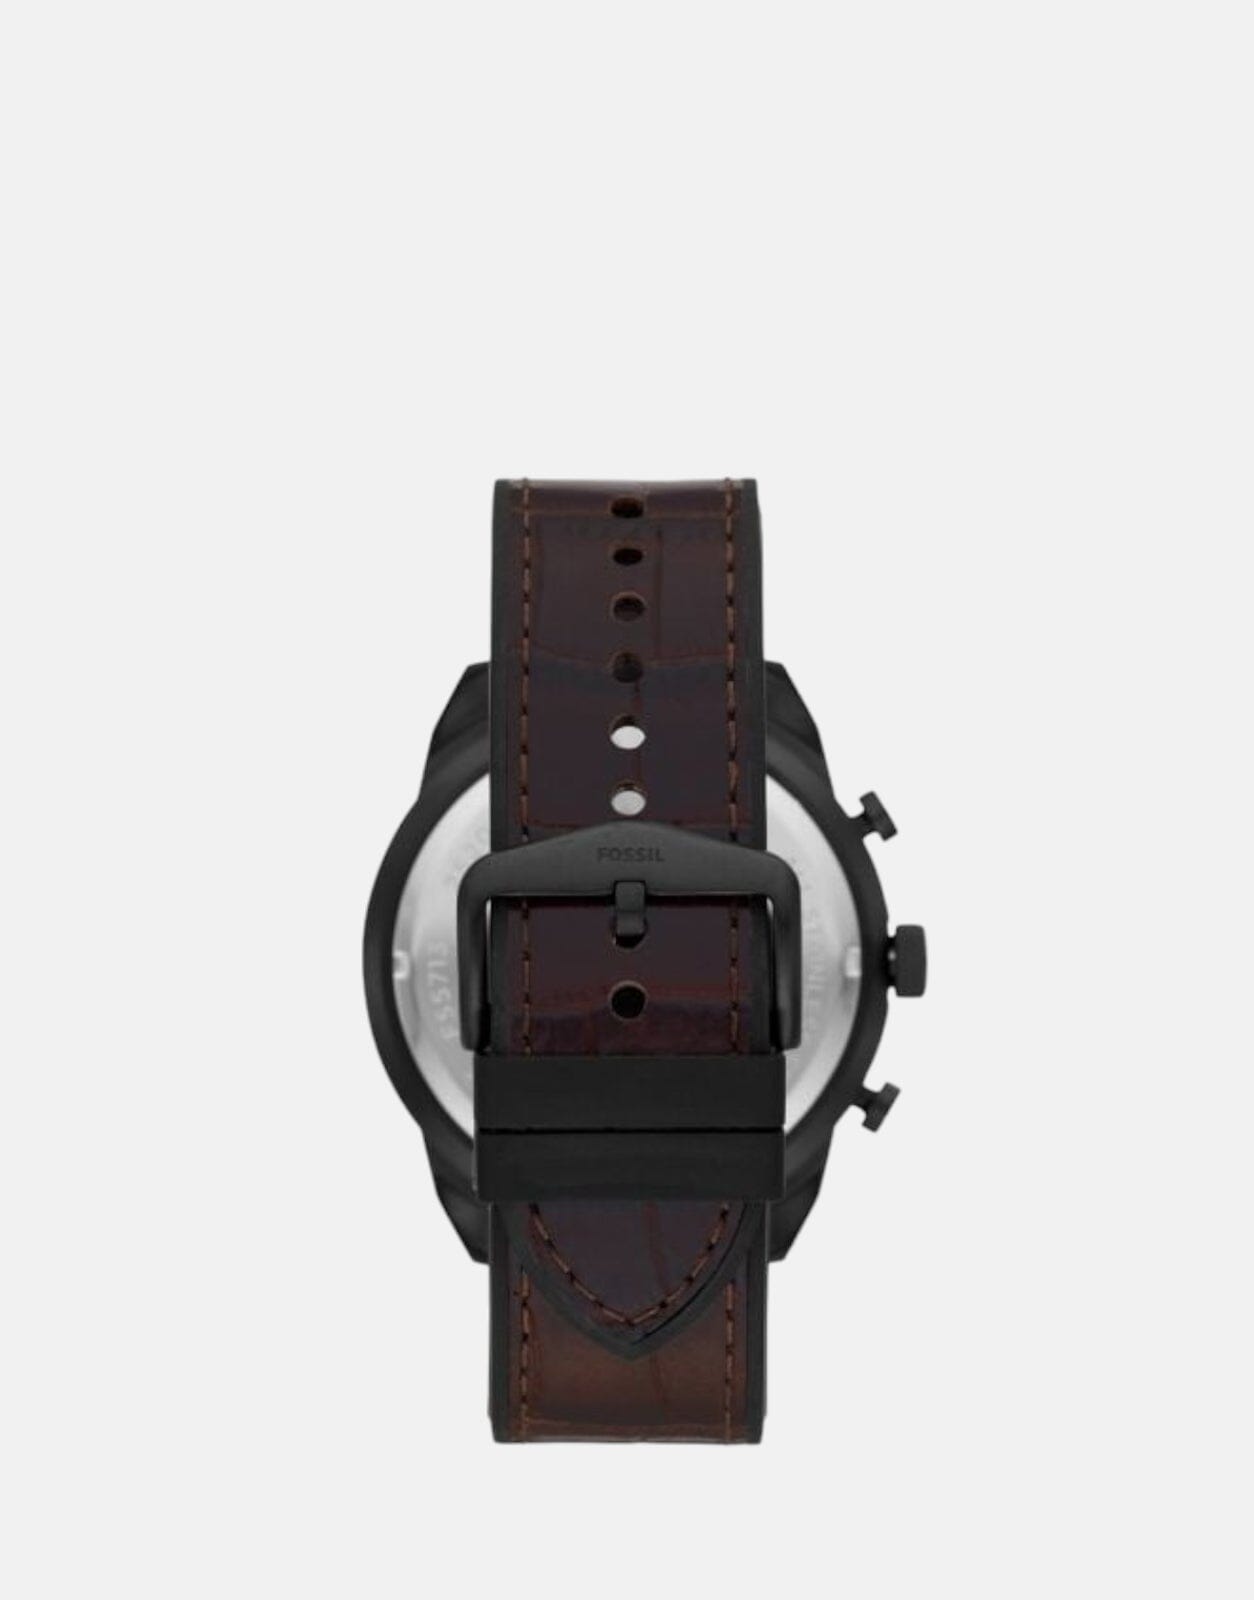 Fossil Bronson Sport Brown Leather Watch - Subwear